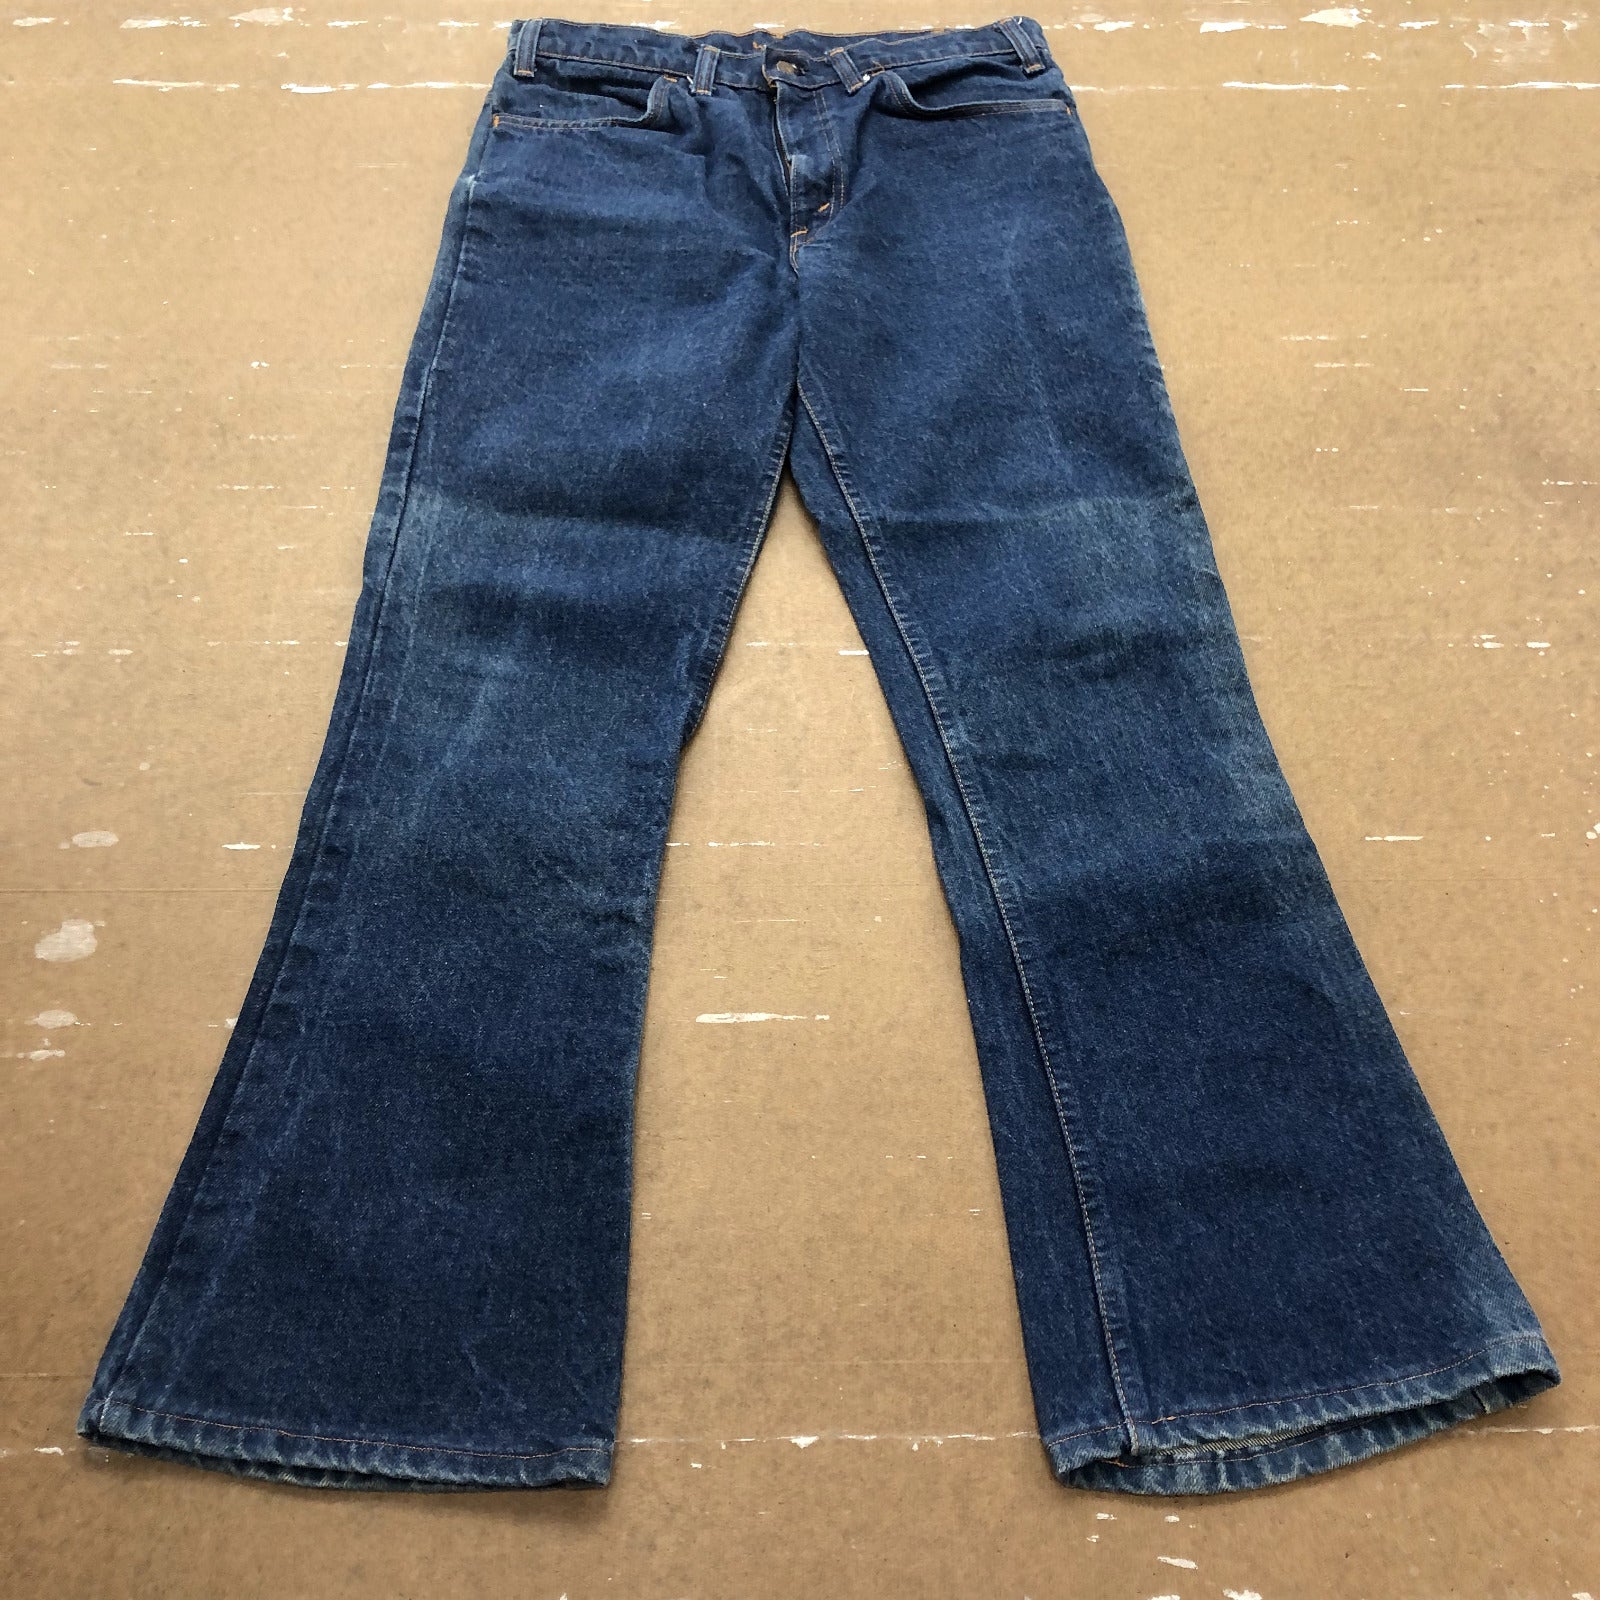 Vintage Levi's Orange Tab Blue Denim Flared Boot Cut Jeans Adult Size 34 x 36